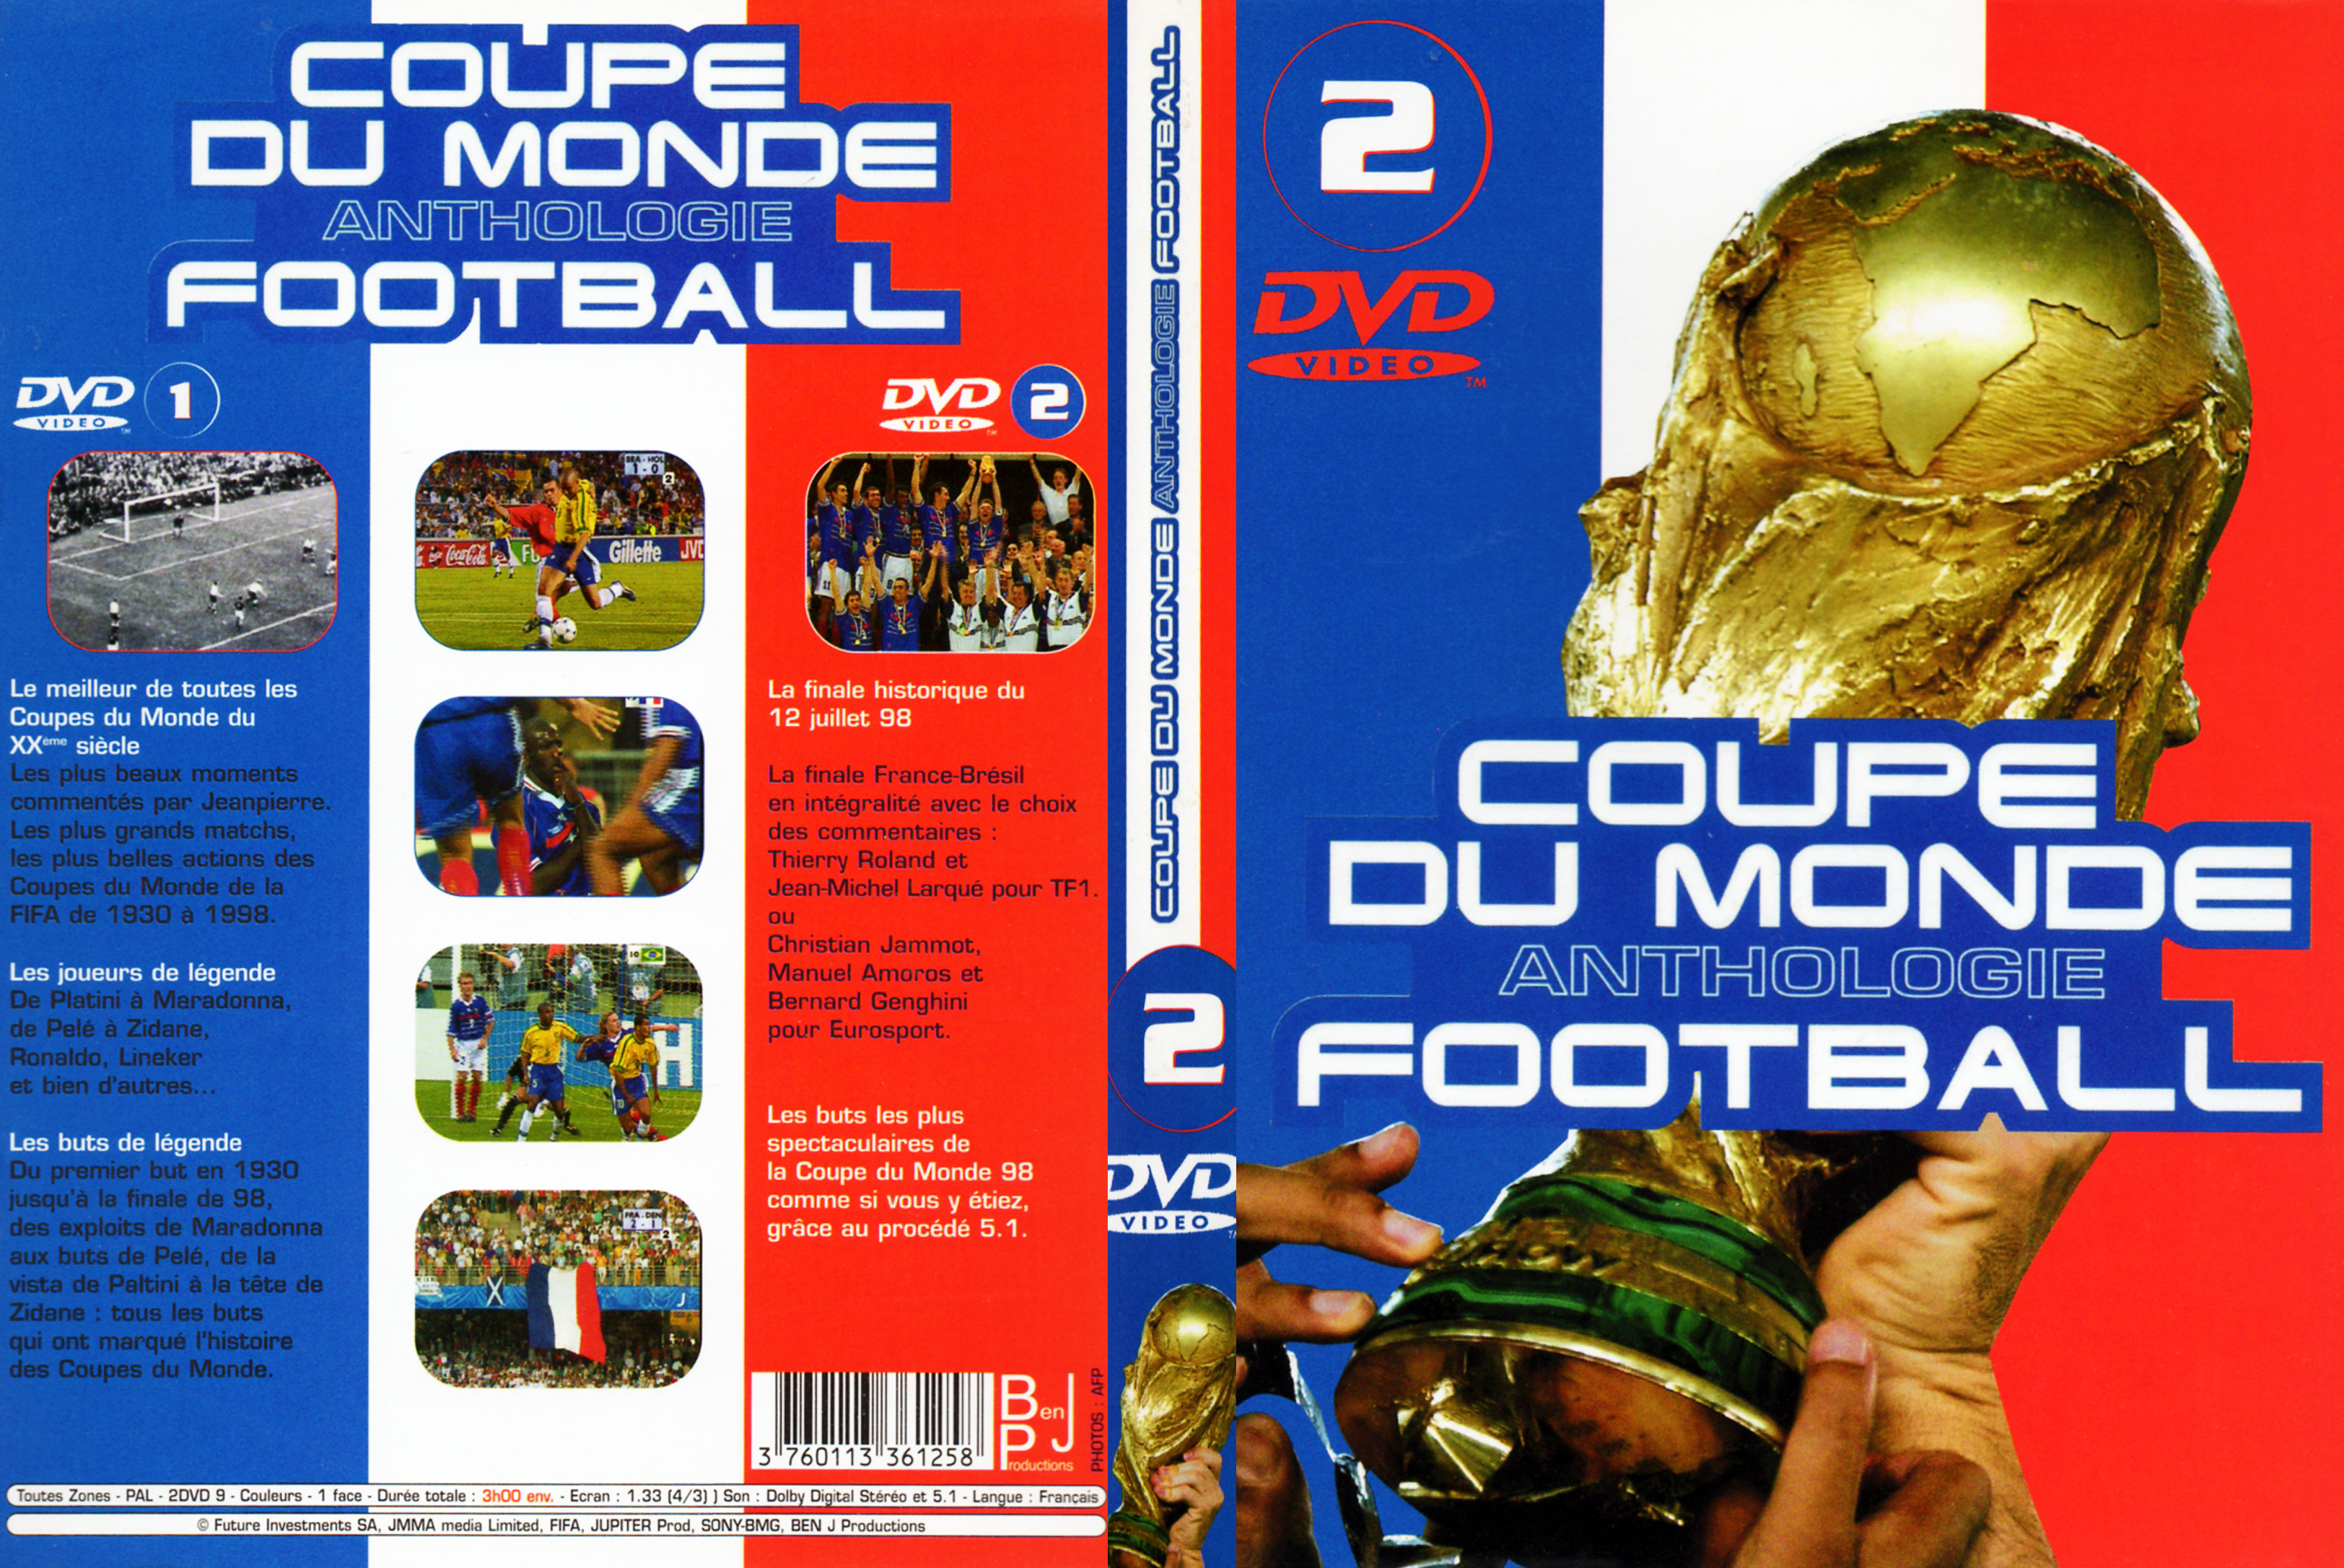 Jaquette DVD Coupe du monde Anthologie Football